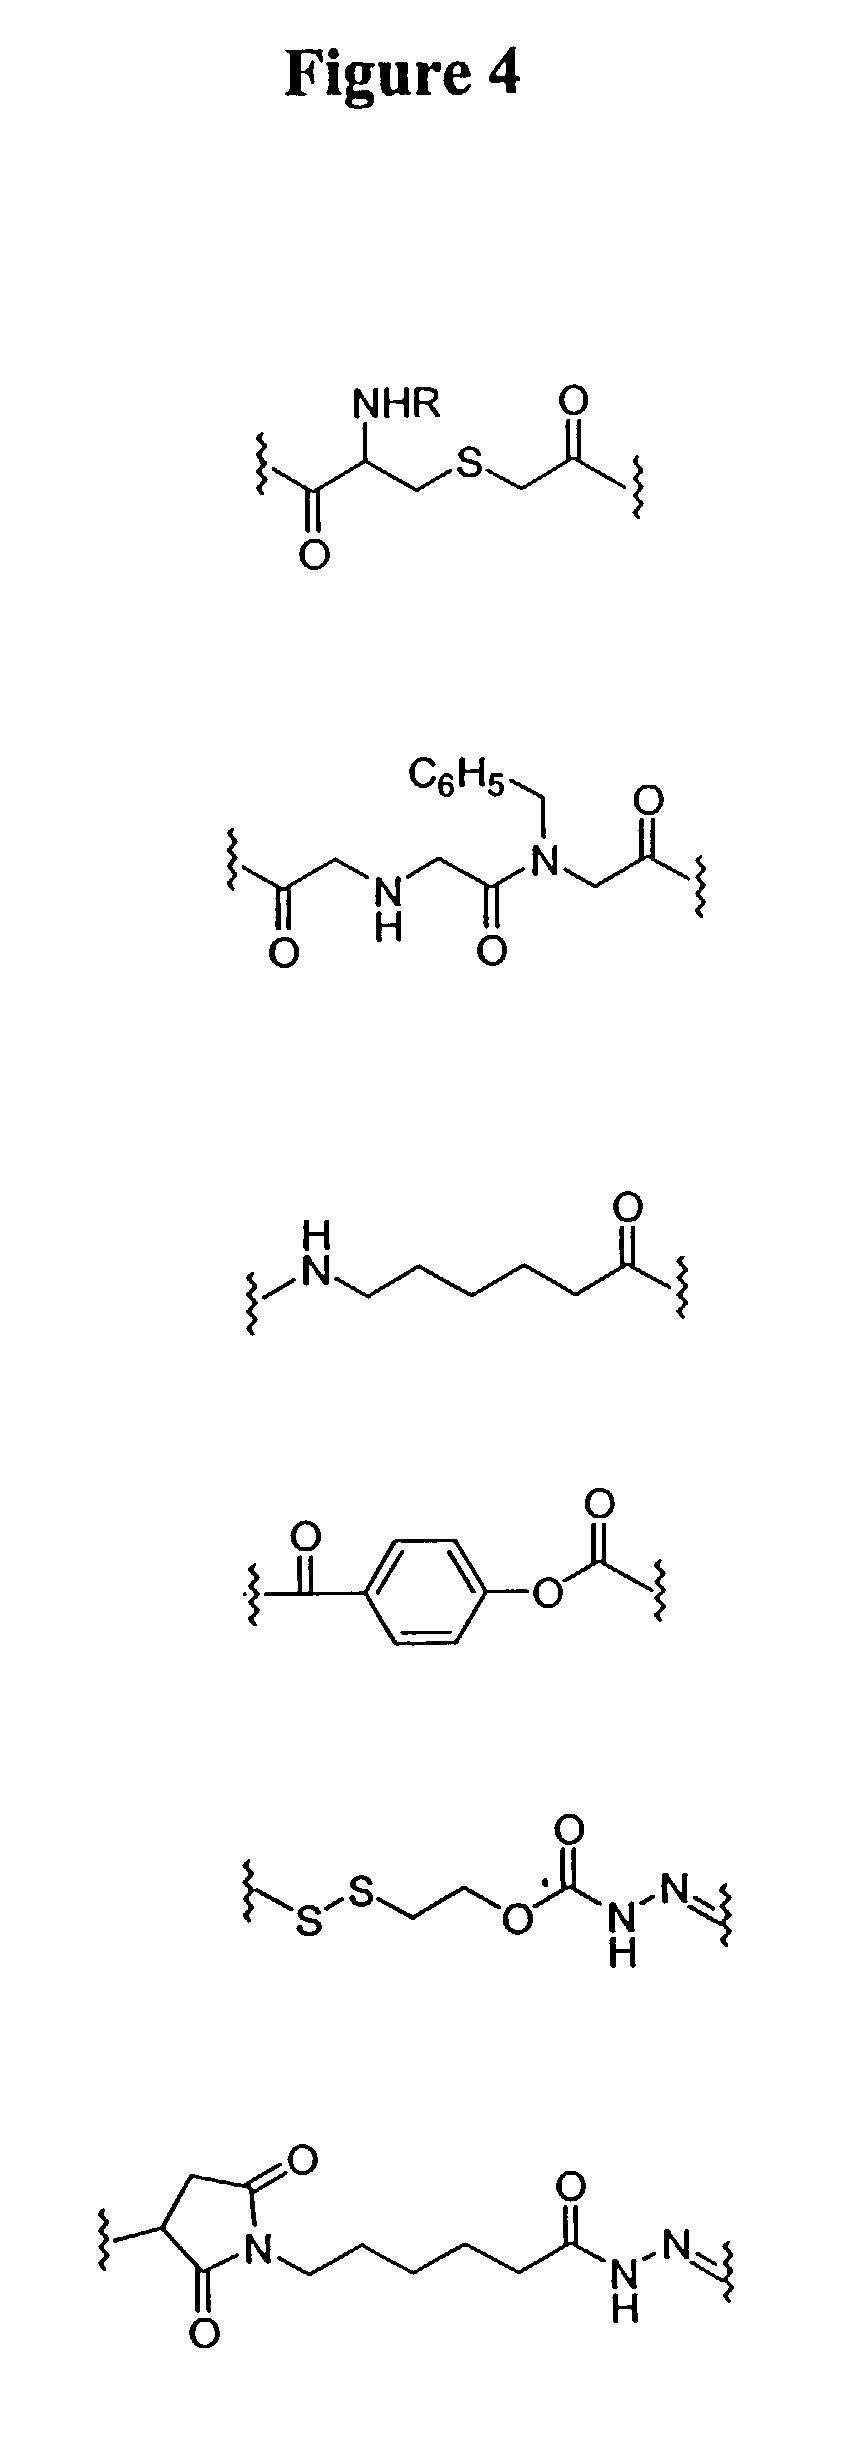 Guanidinium transport reagents and conjugates